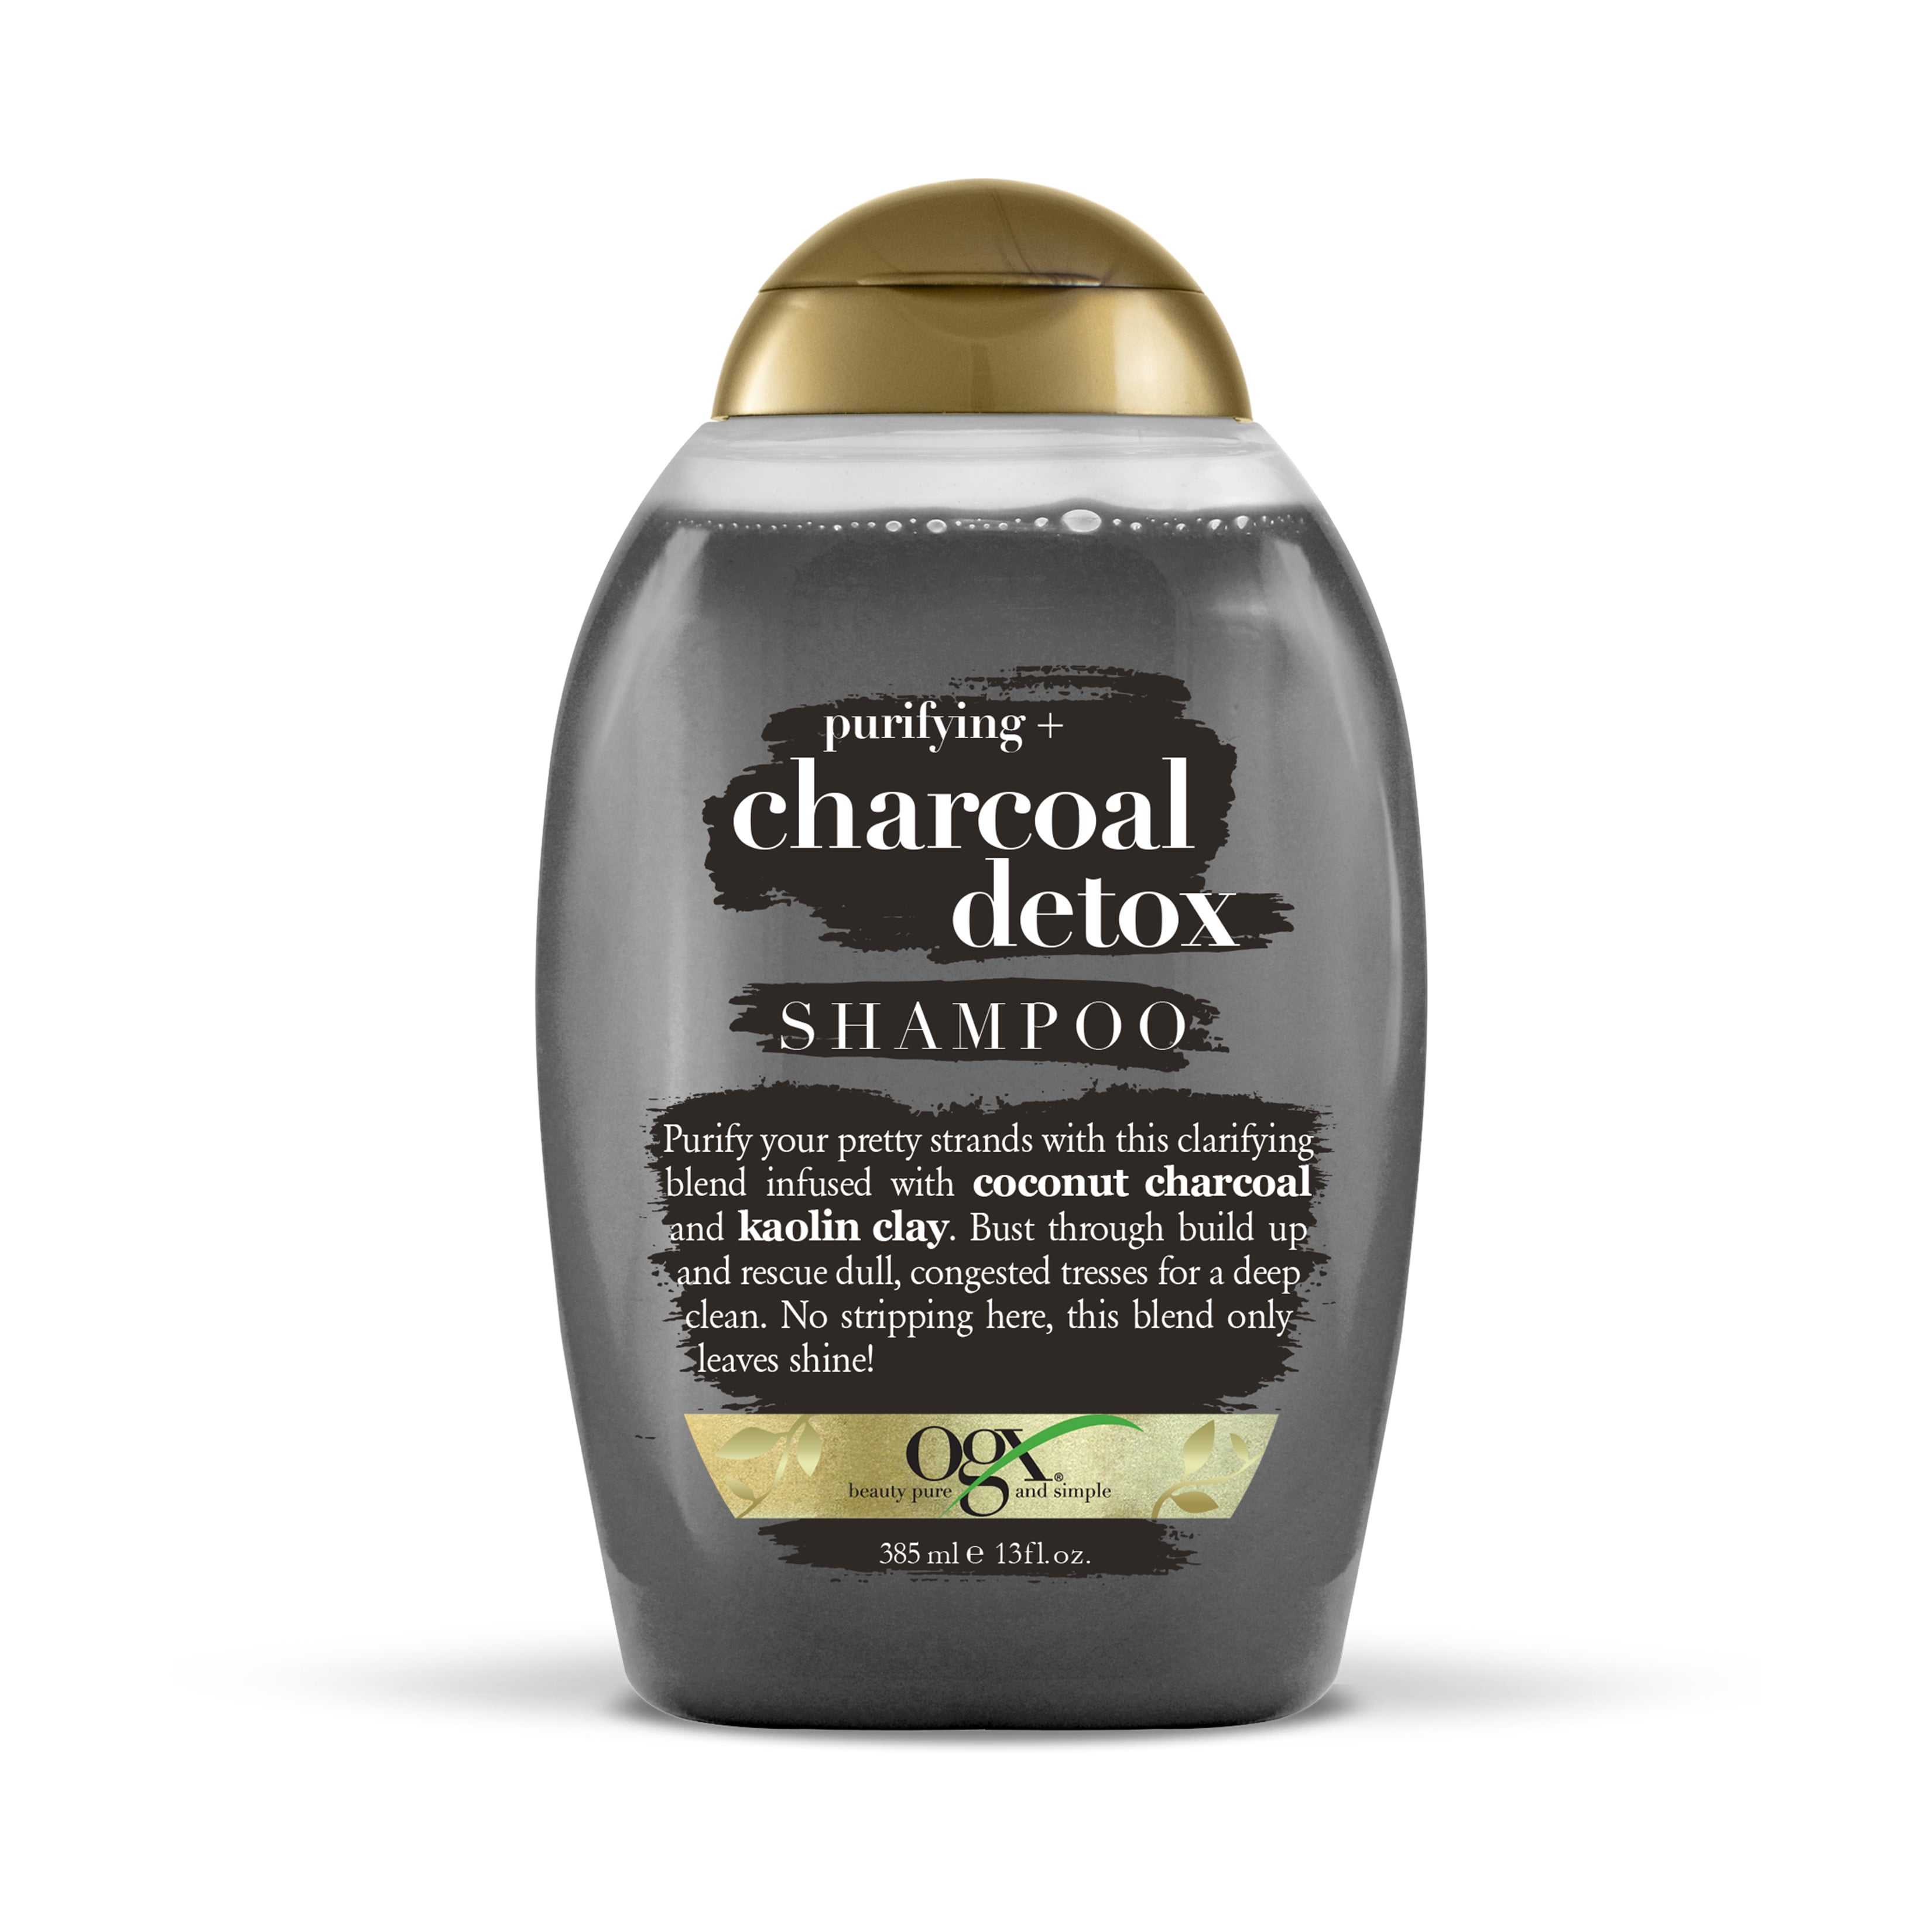  Clarifying Shampoo for Build Up - Detox Shampoo for